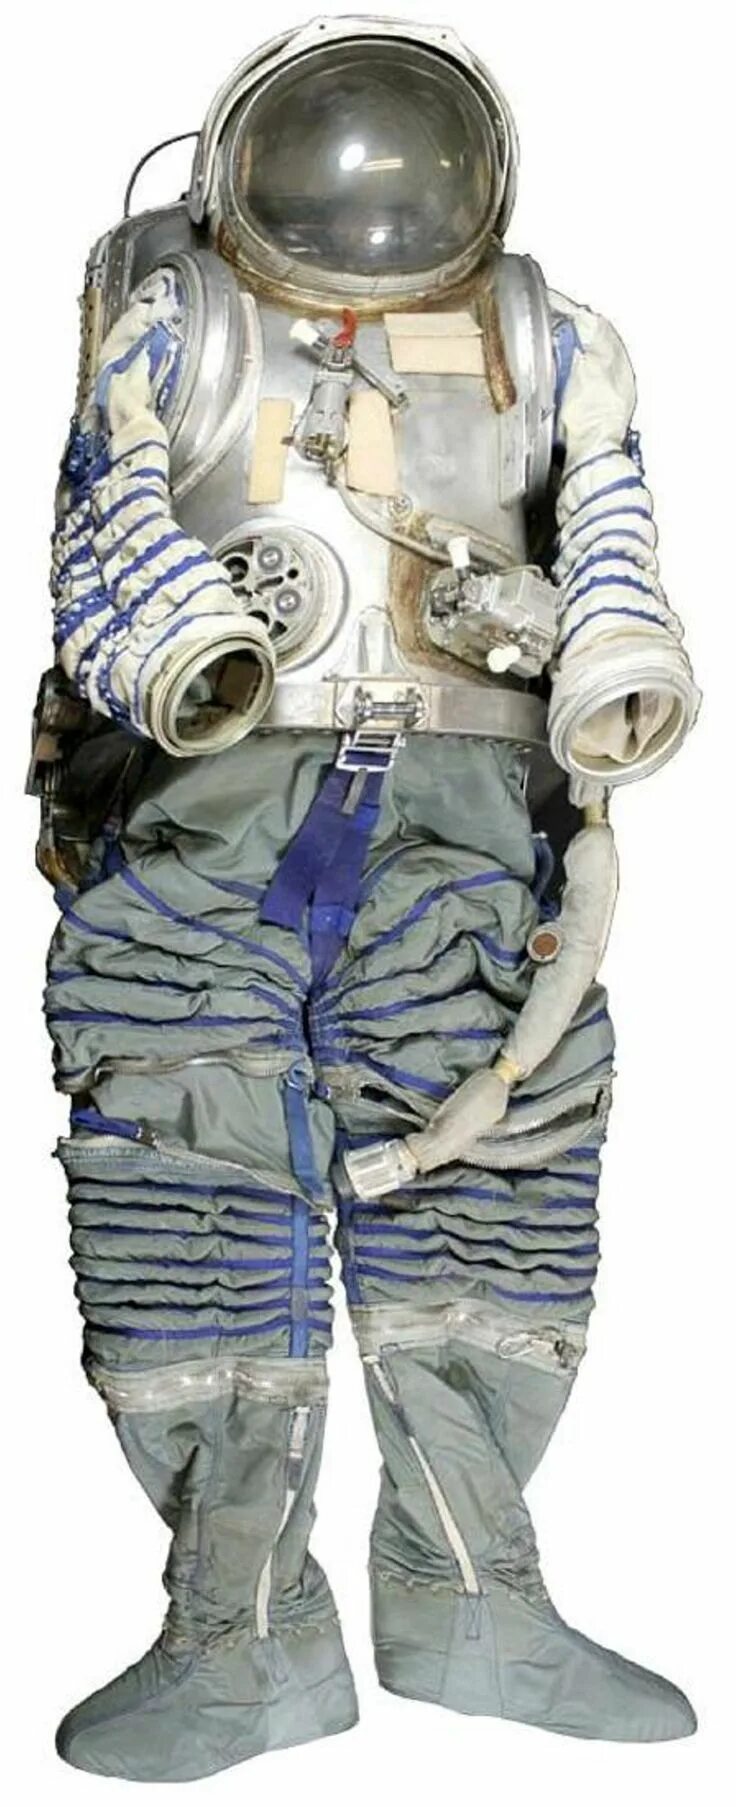 Игольчатый скафандр. Скафандр Орлан. Скафандр Космонавта Орлан. Орлан костюм Космонавта. Строение скафандра Орлан МКС.